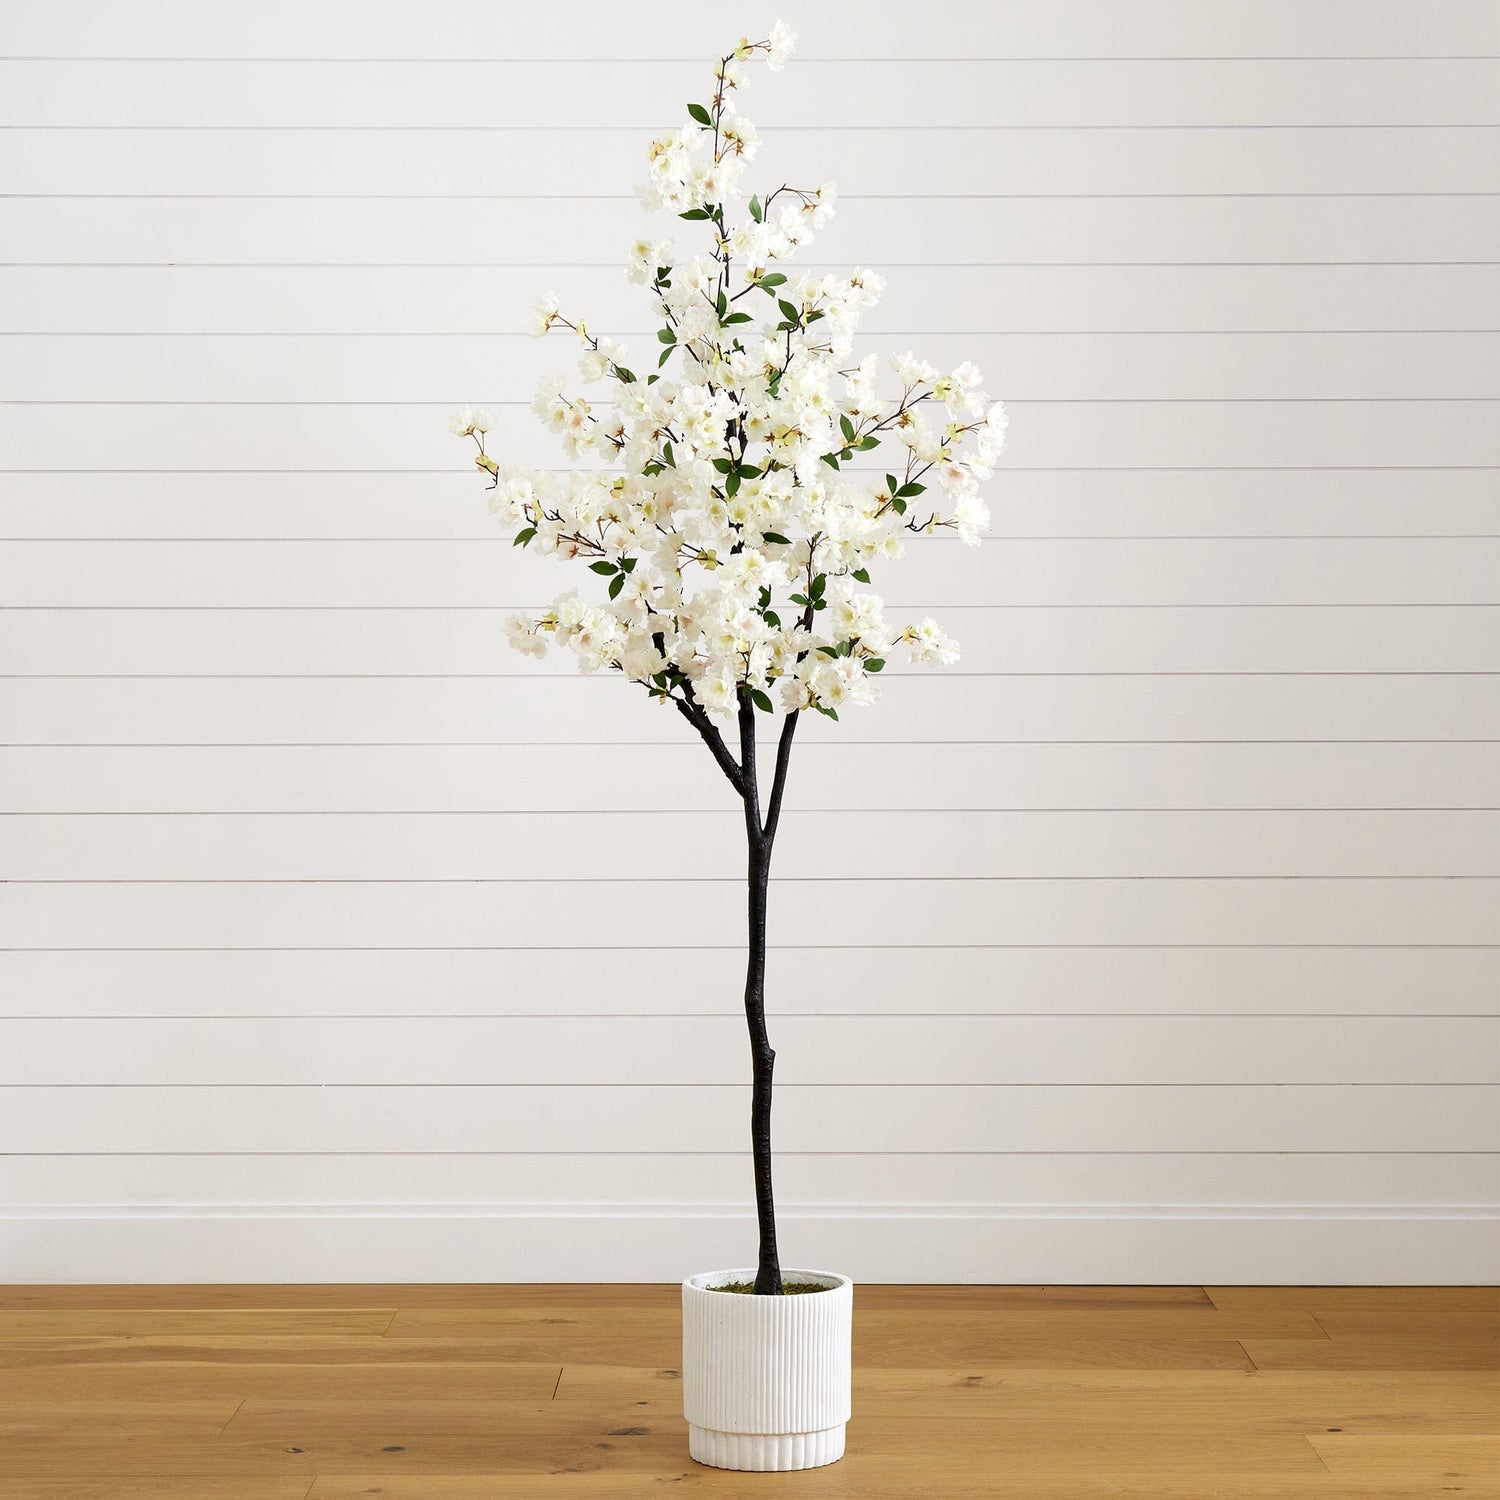 6’ Artificial Cherry Blossom Tree with White Decorative Planter